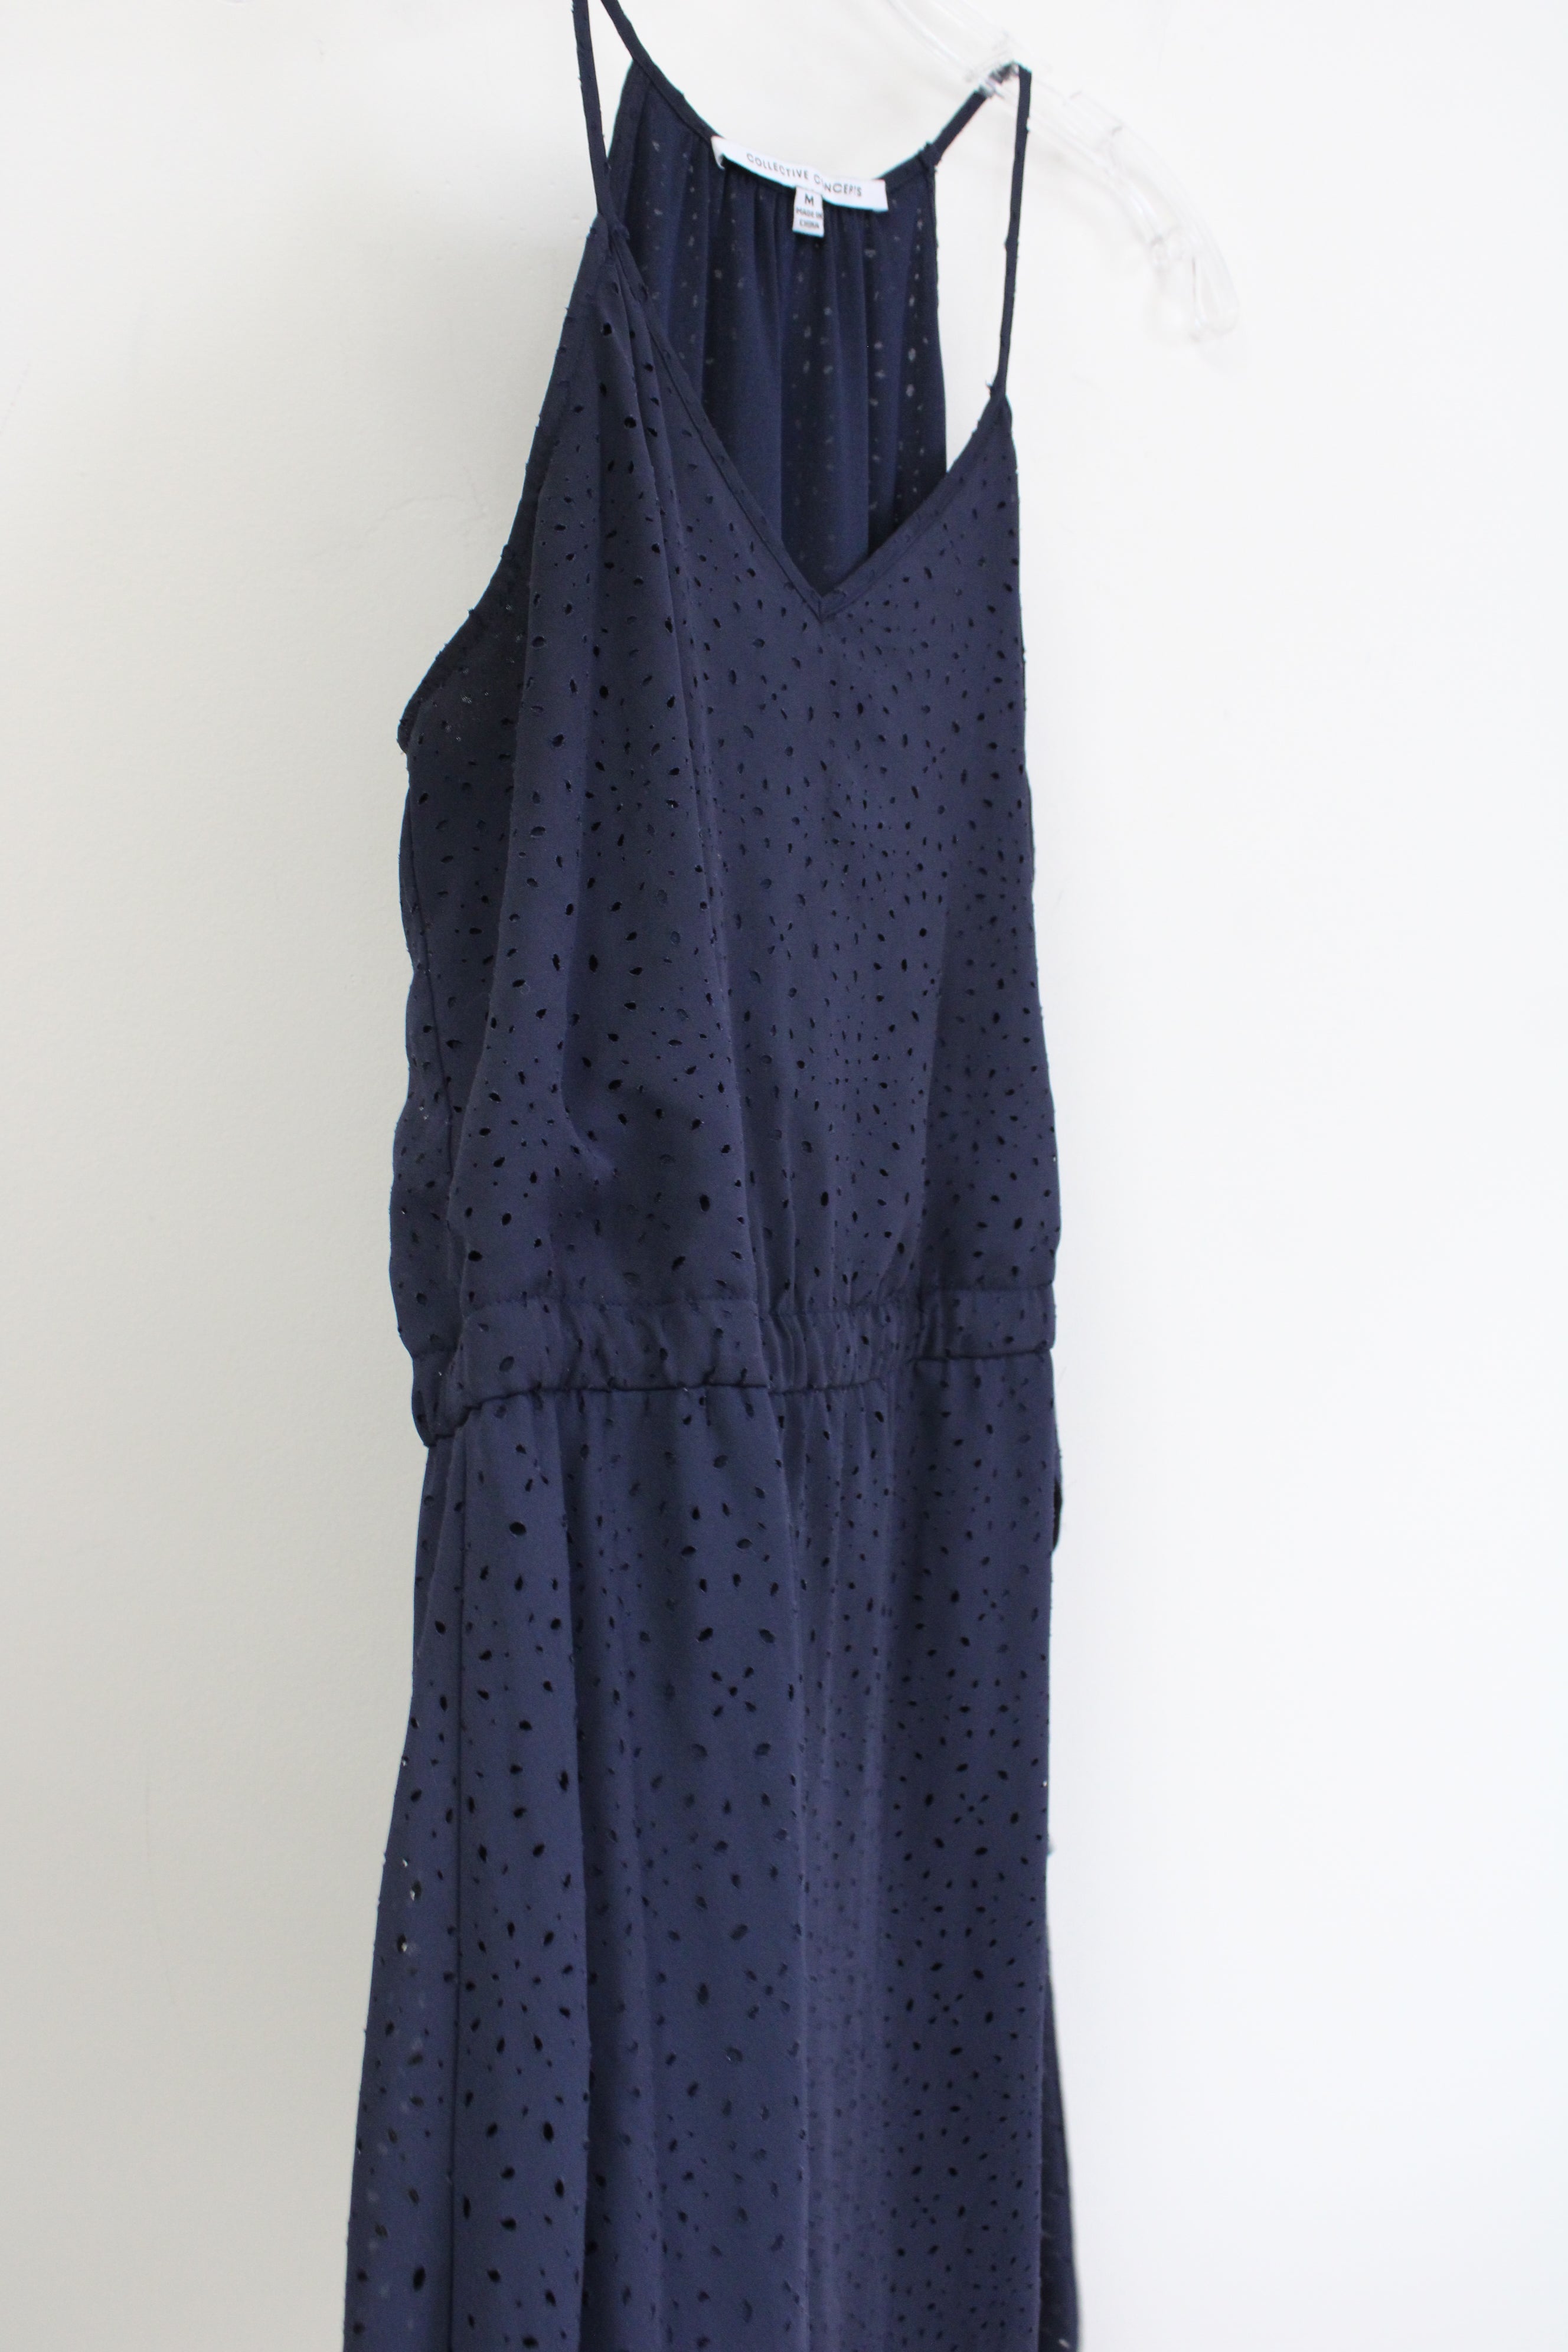 Collective Concepts Navy Blue Dress | M